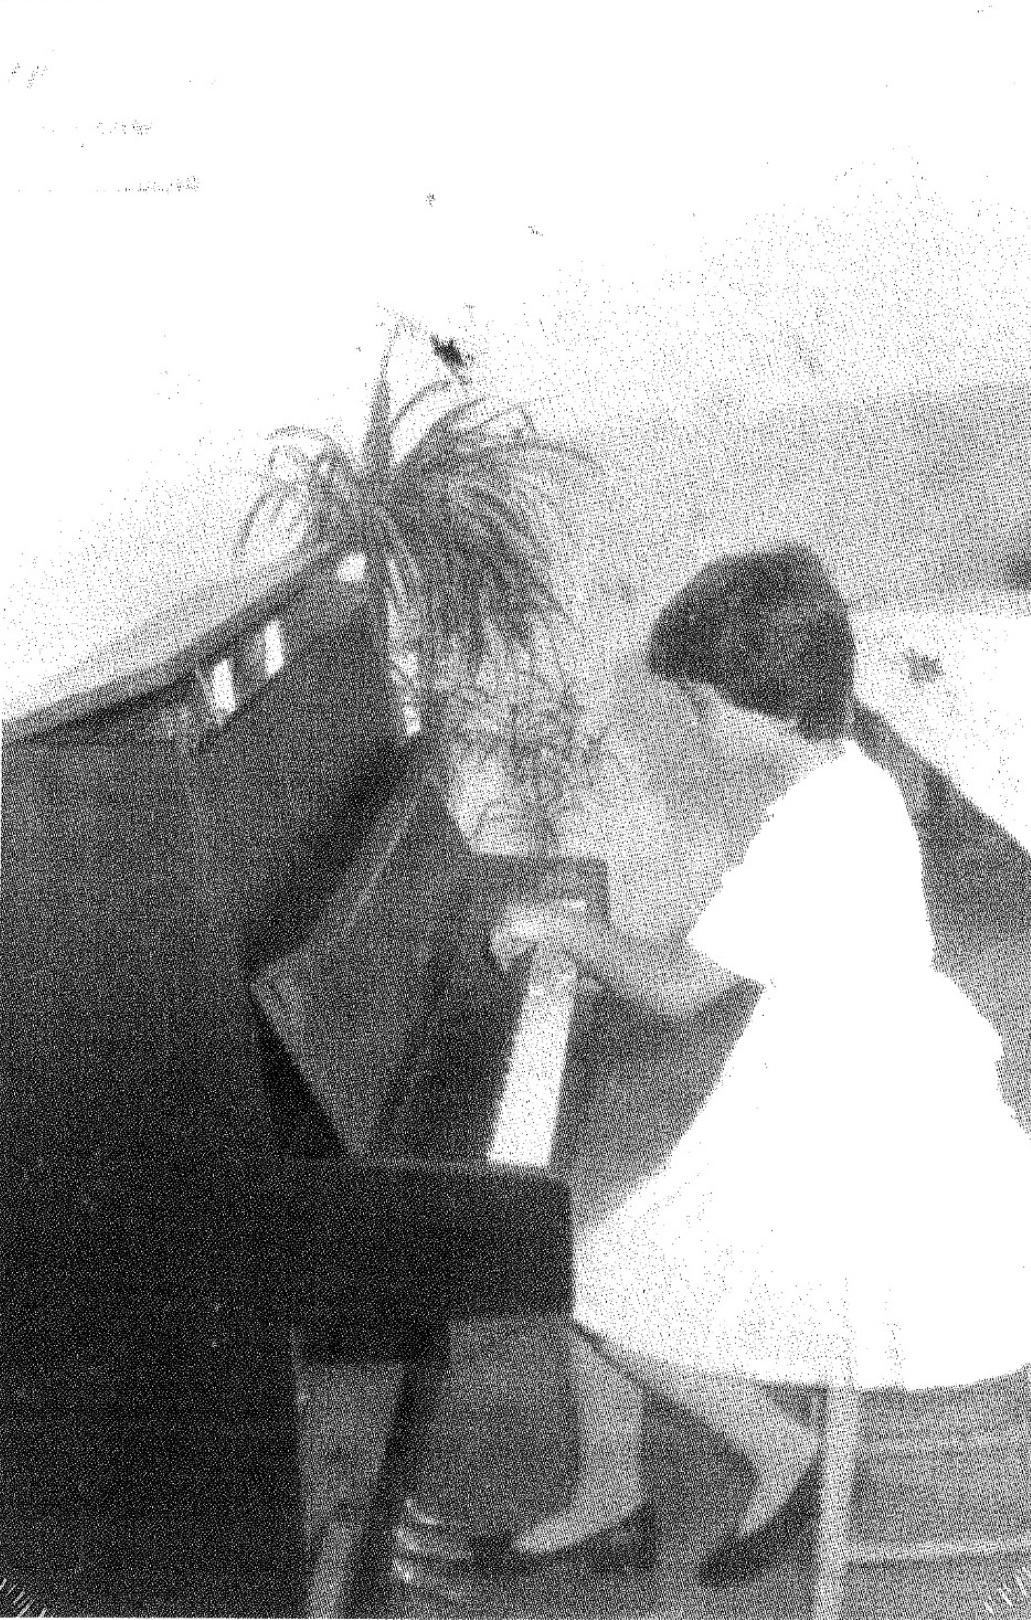 Elida Dakoli playing the piano as a child in Albania. (Courtesy of <a href="http://www.elidadakoli.com/">Elida Dakoli</a>)